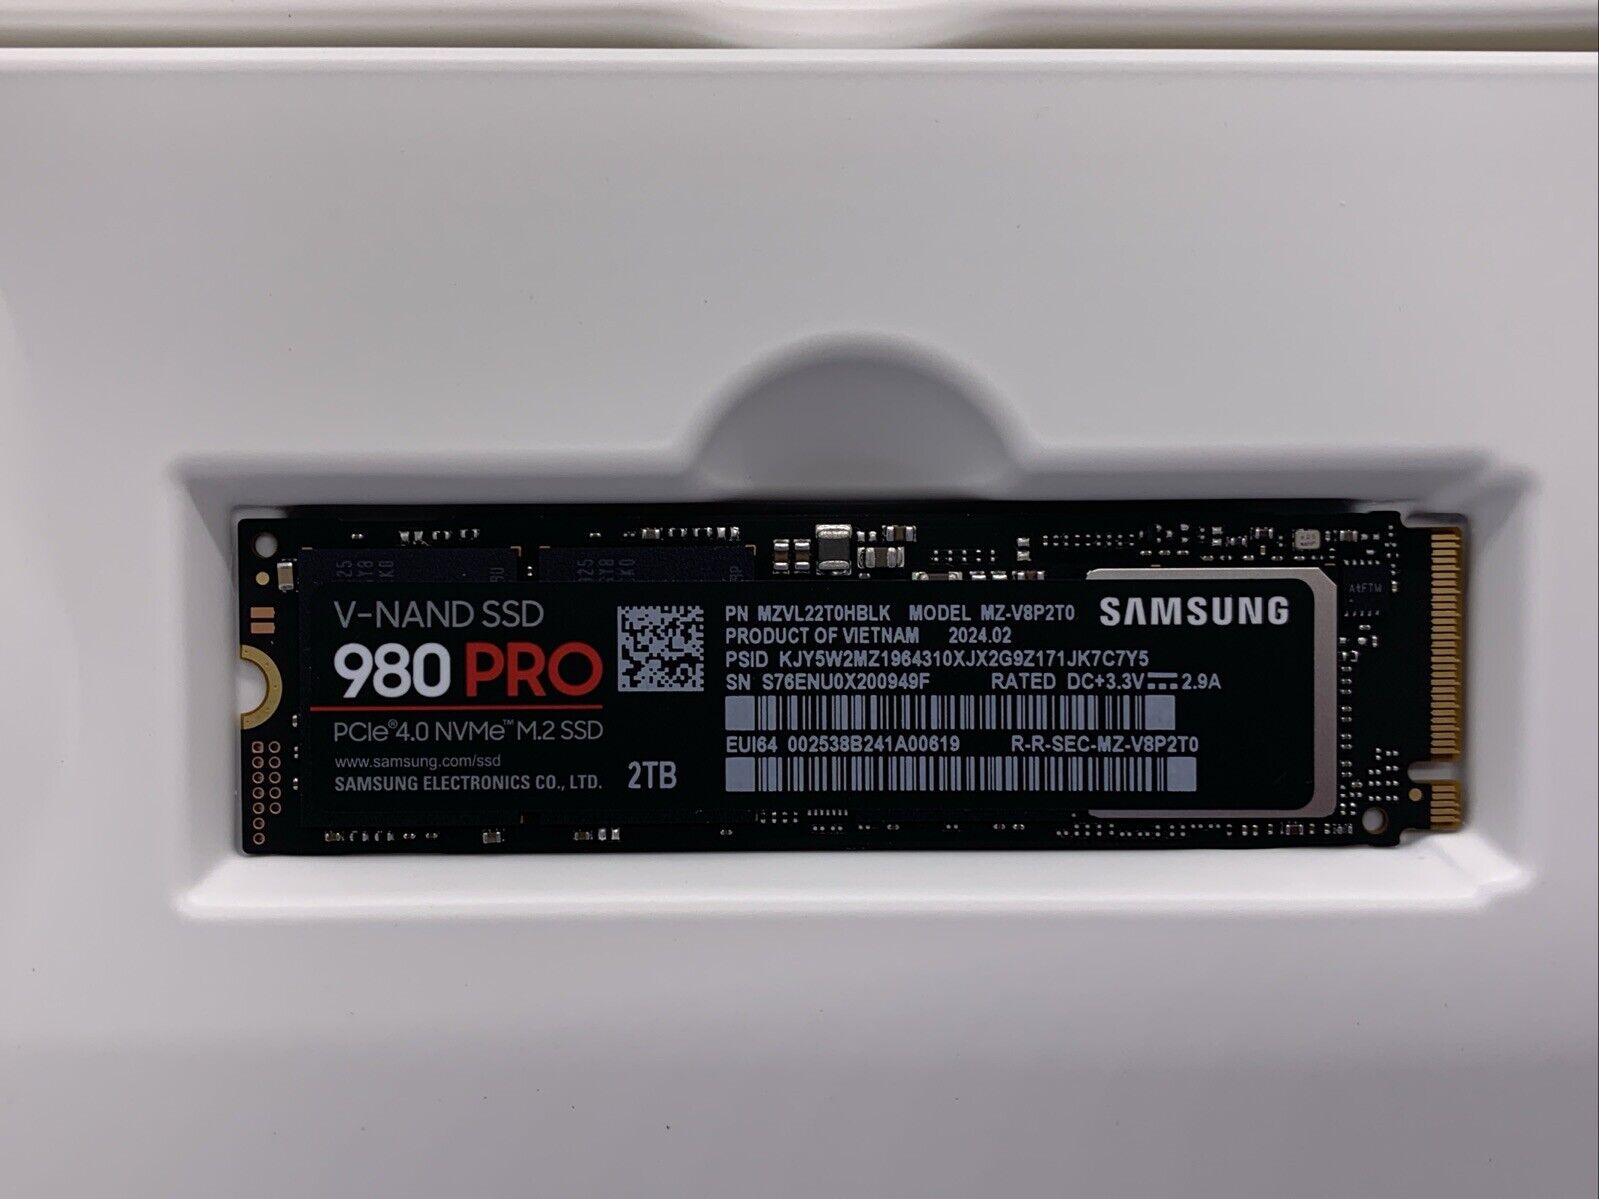 Samsung 980 PRO 2TB Internal Gaming SSD PCIe 4.0 NVMe